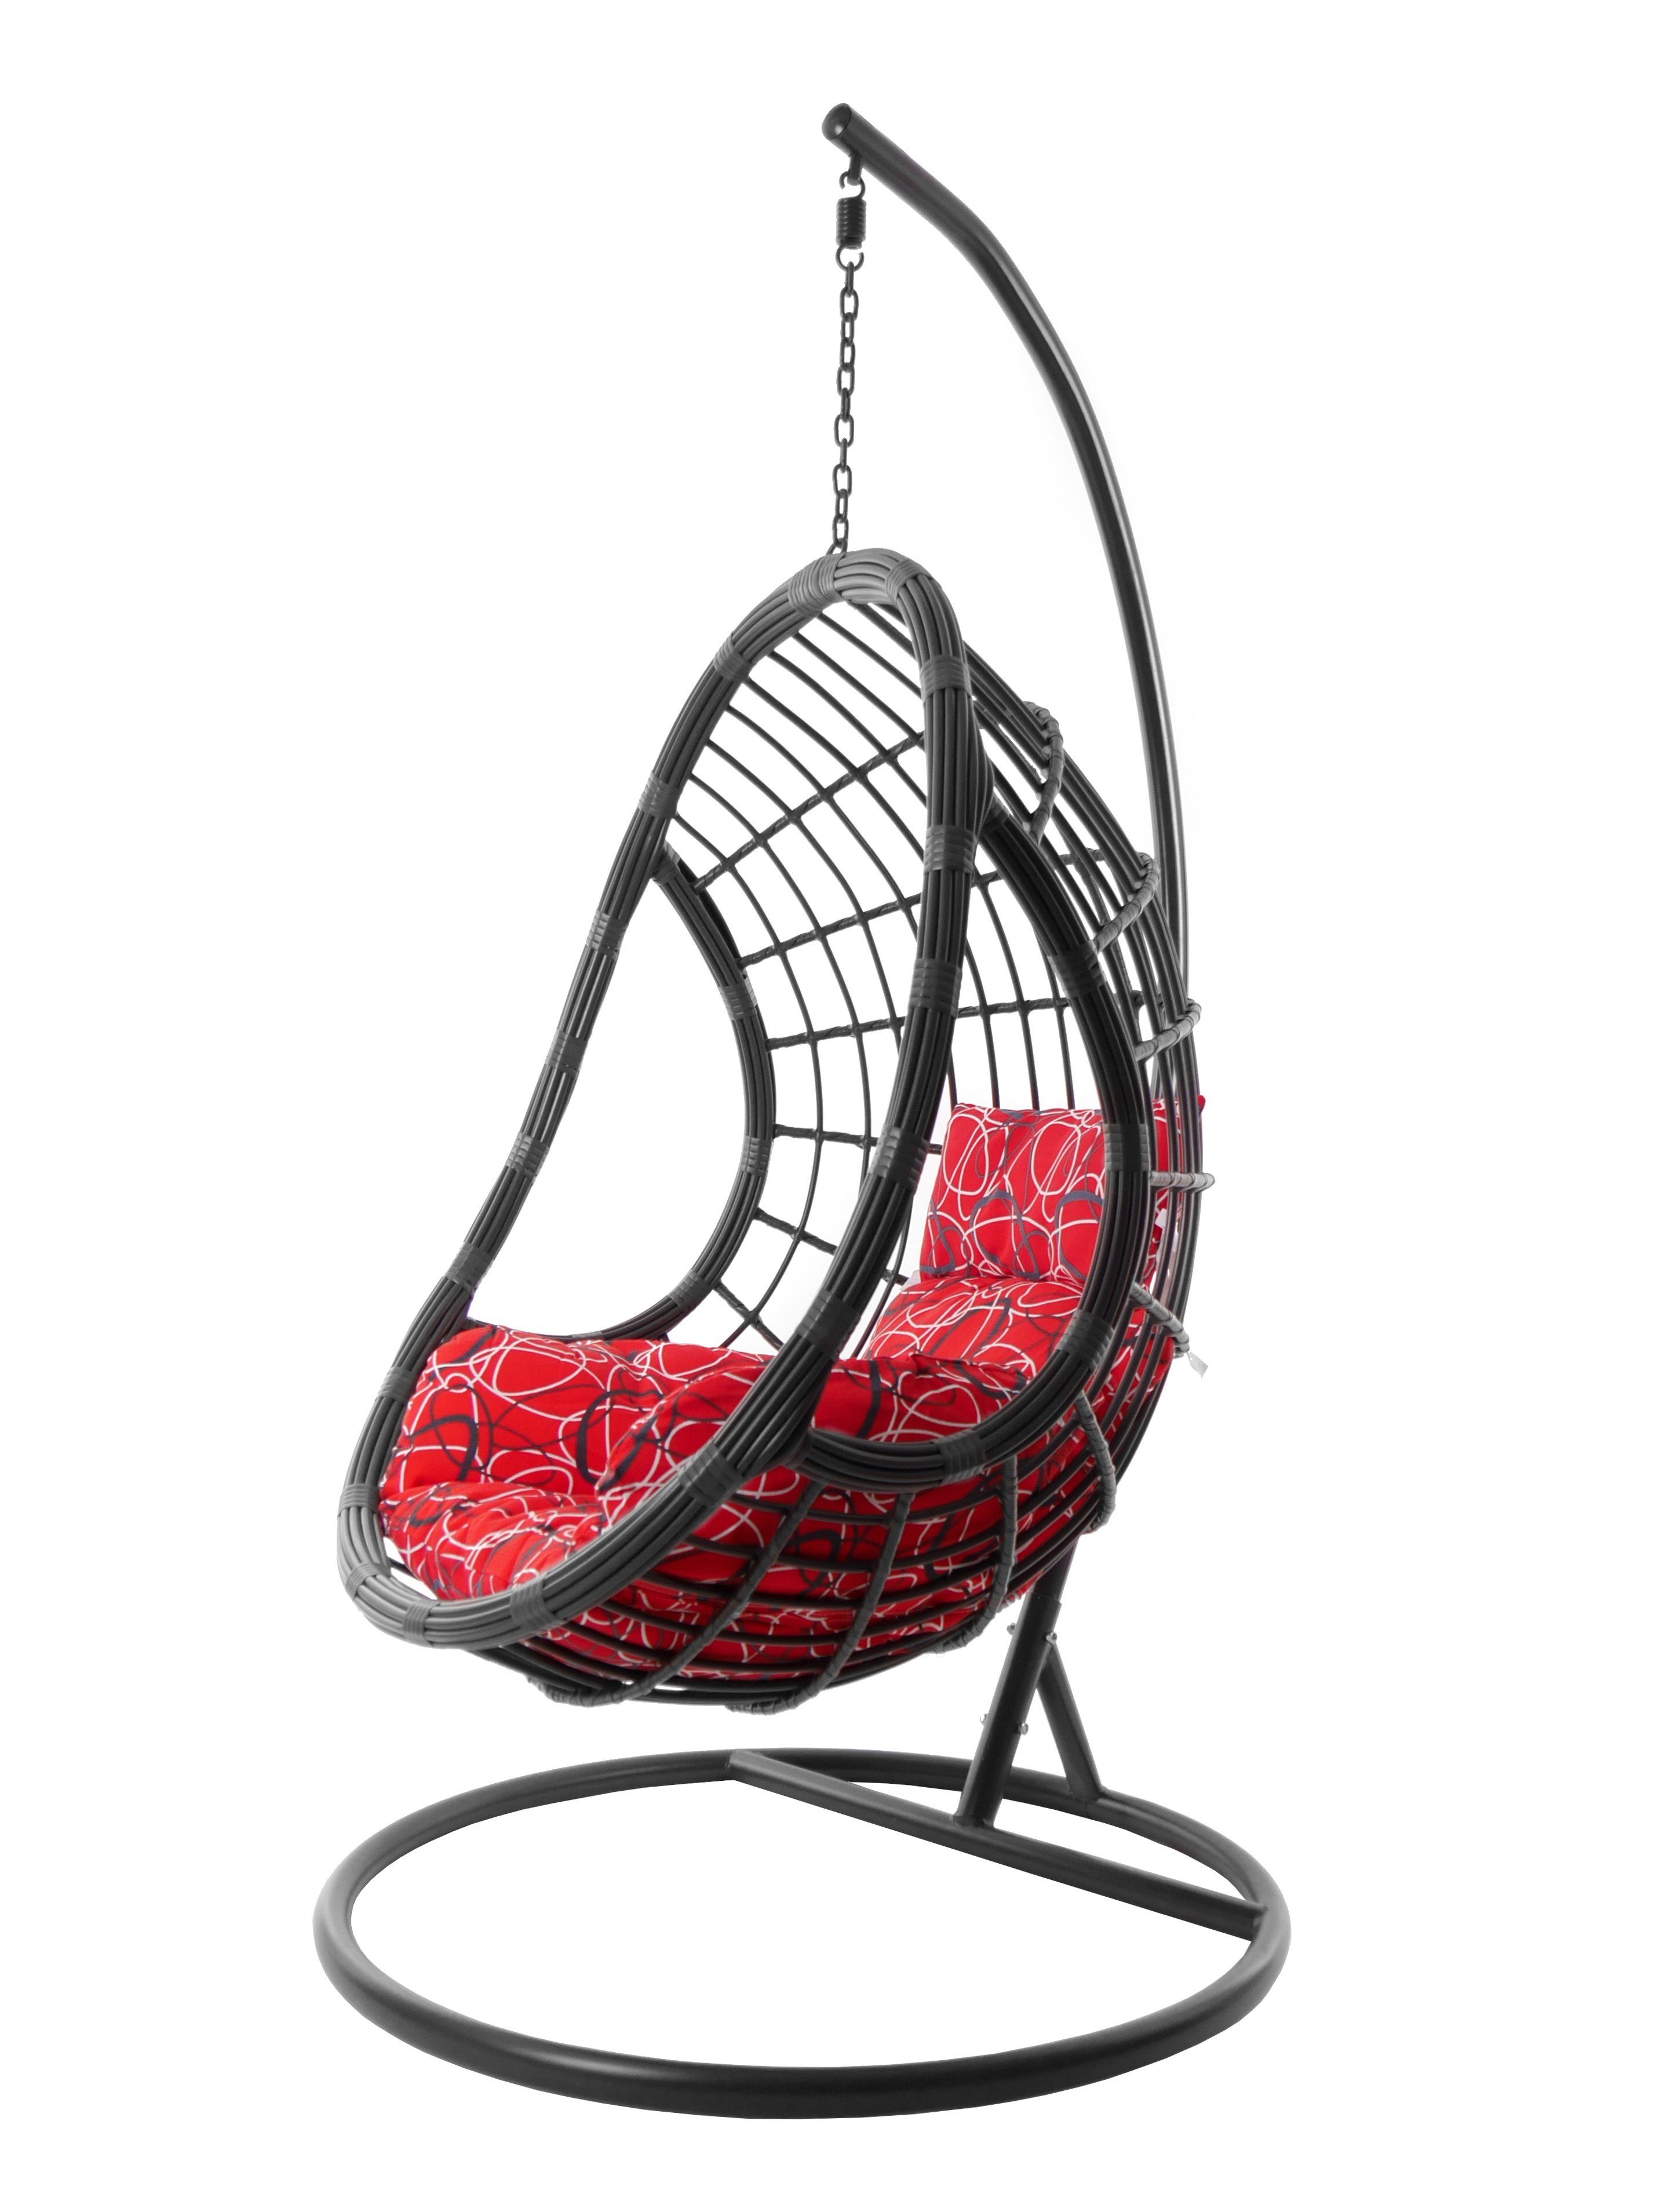 KIDEO Hängesessel Hängesessel PALMANOVA grau, moderne Loungemöbel, Hängestuhl in grau, inklusive Gestell und Kissen rot gemustert (3088 red frizzy)